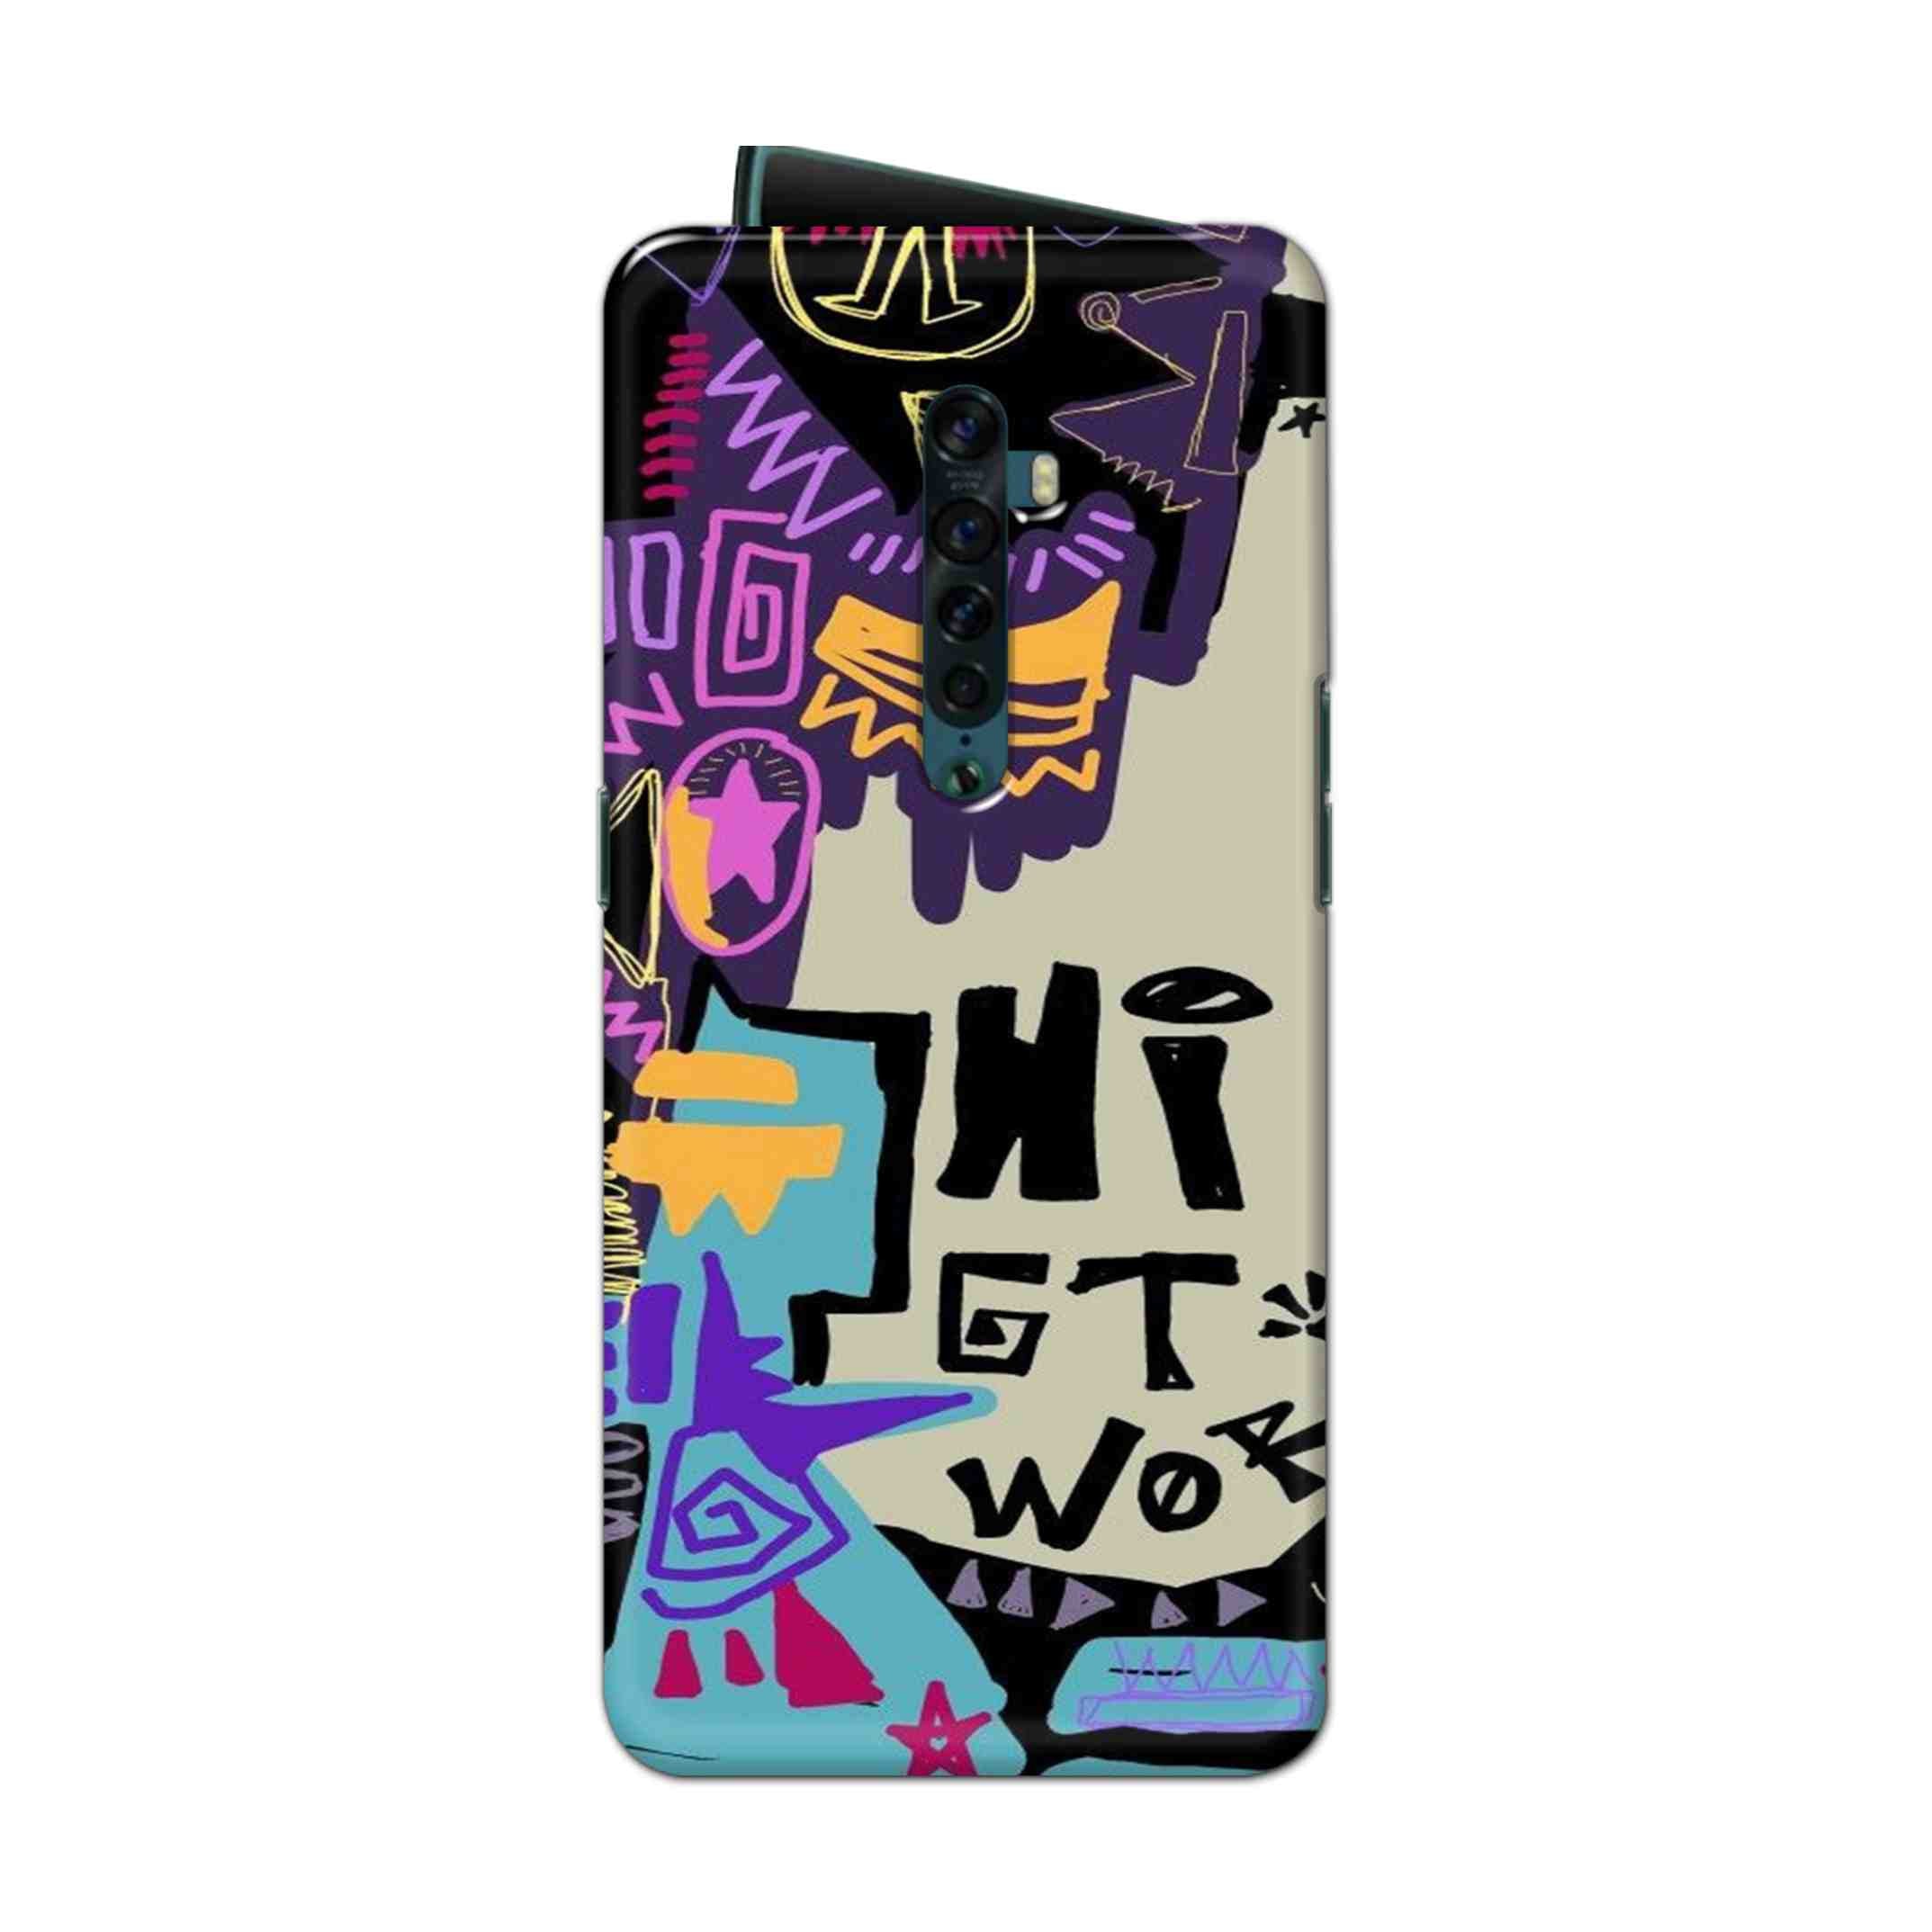 Buy Hi Gt World Hard Back Mobile Phone Case Cover For Oppo Reno 2 Online